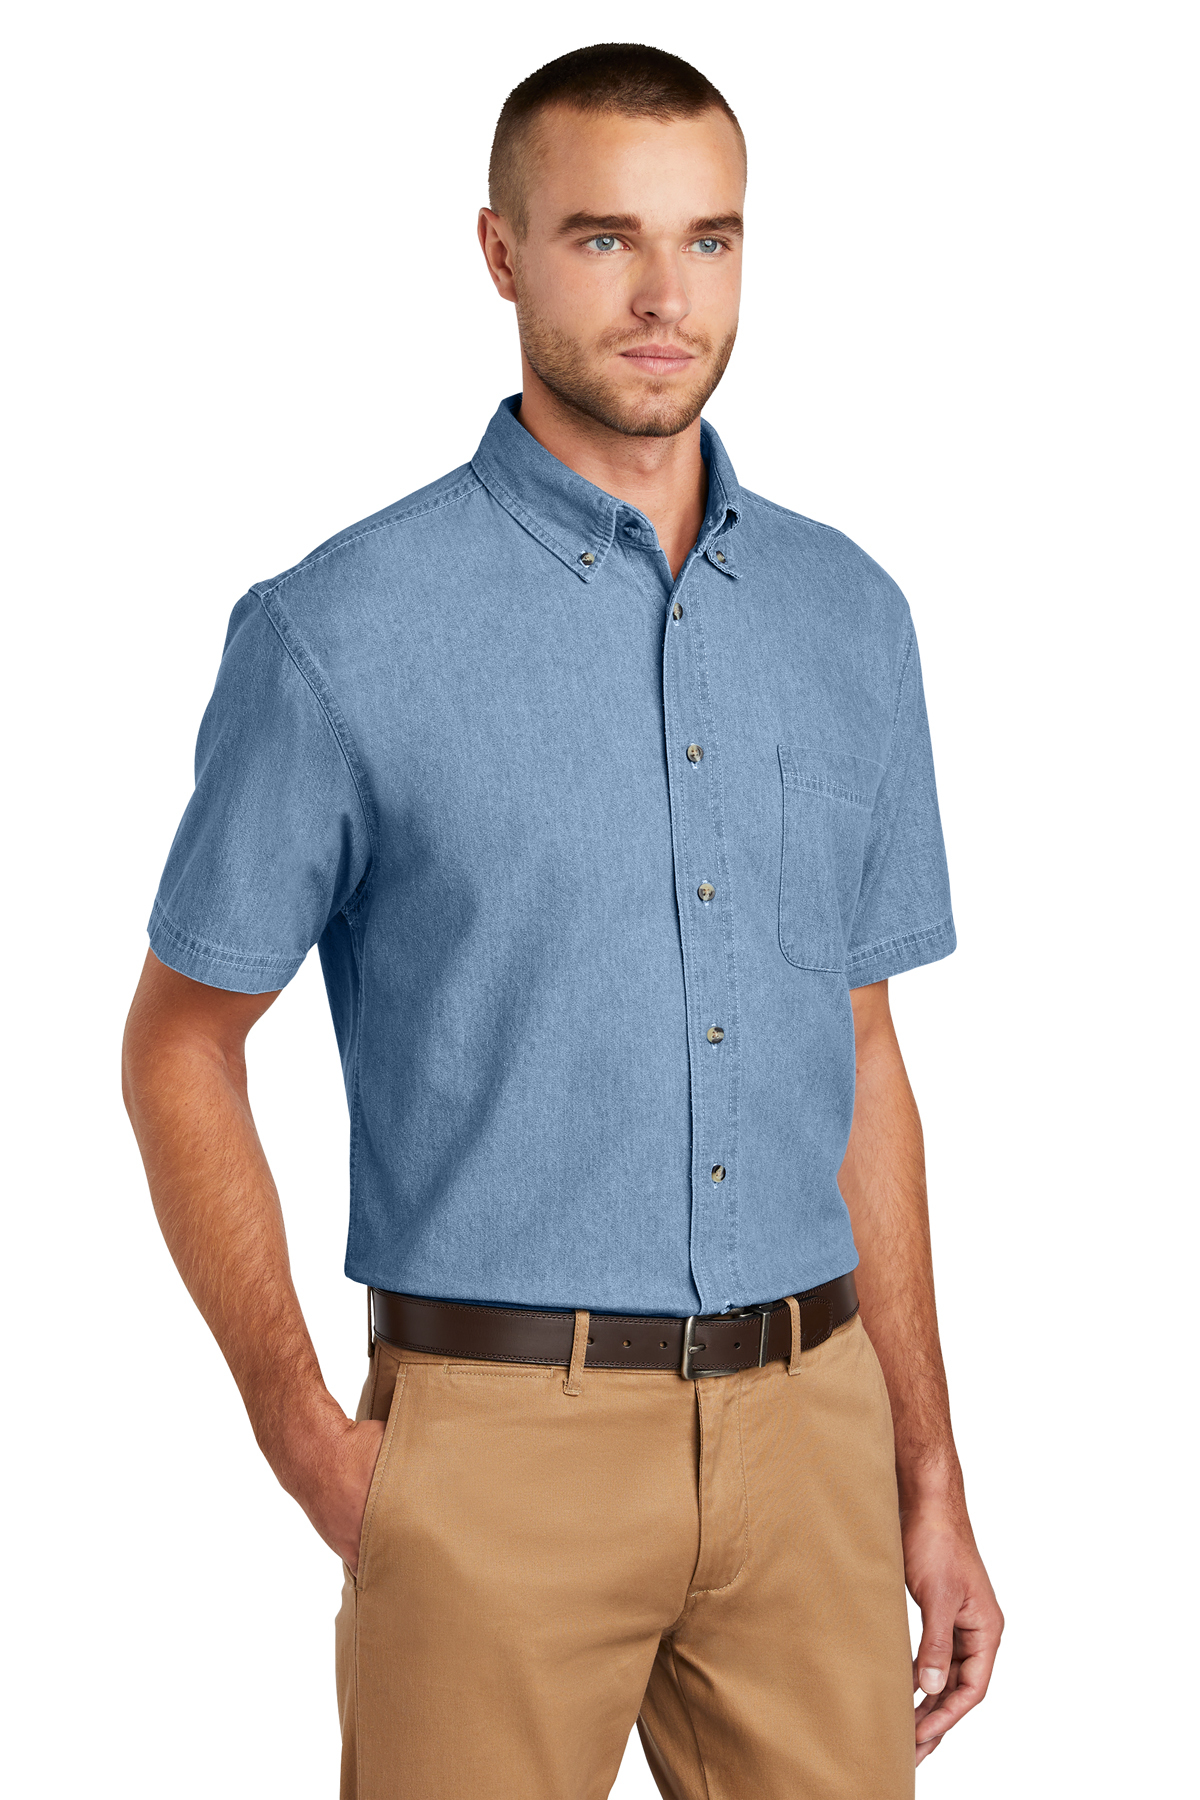 Port & Company Mens Short Sleeve Value Denim Shirt